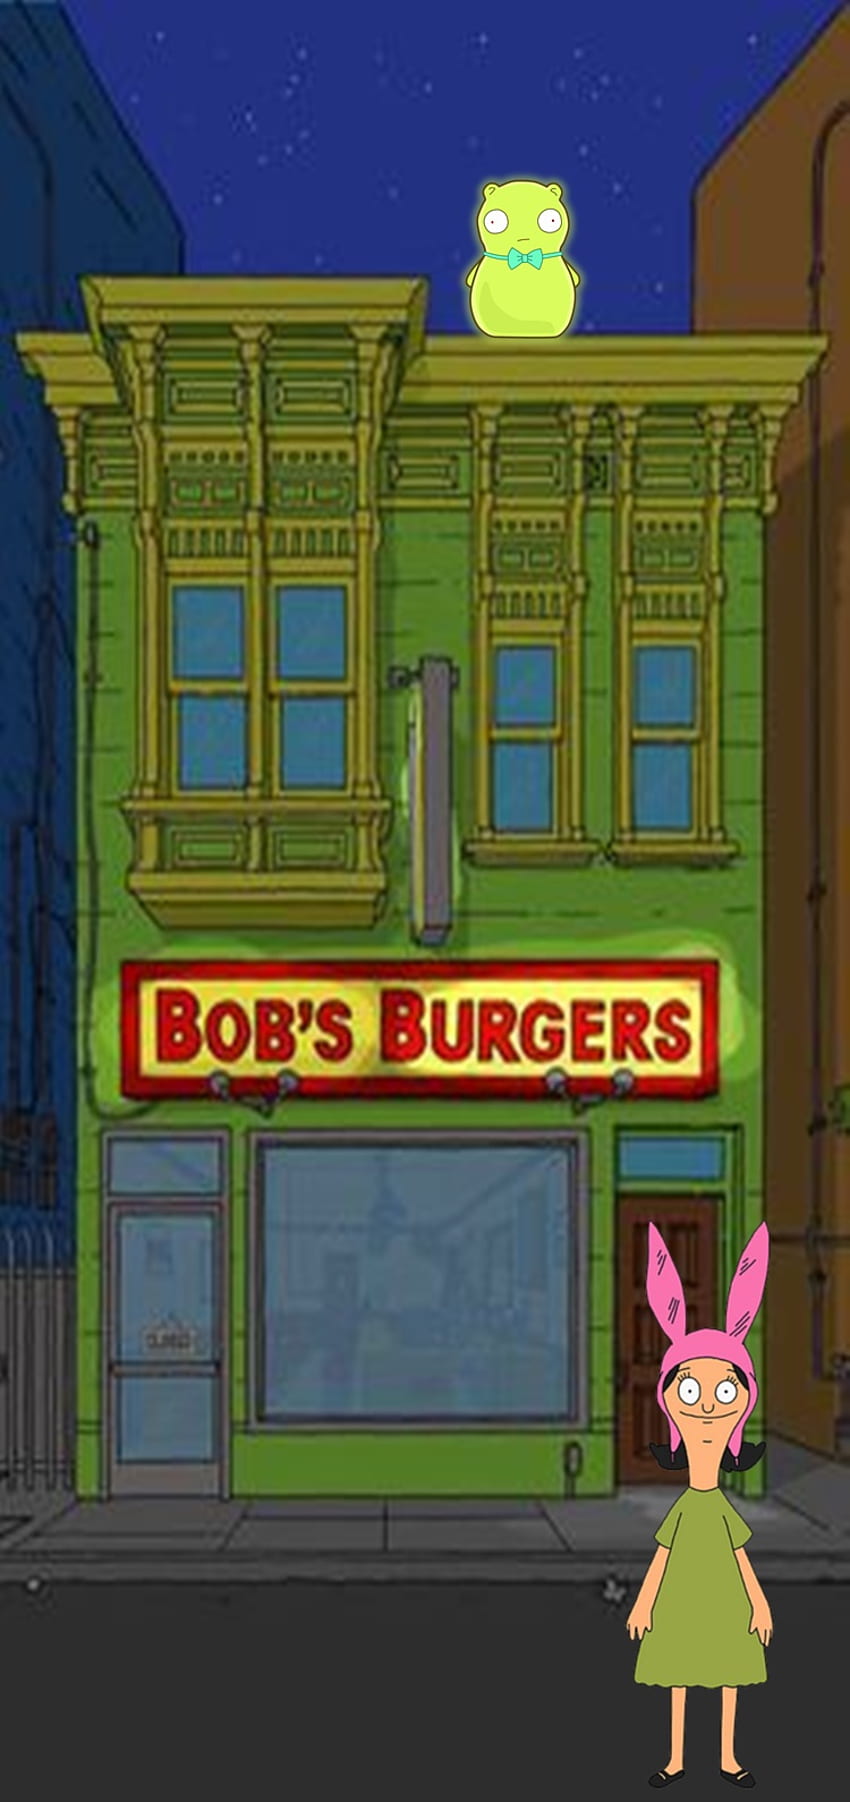 Best Bobs burgers iPhone HD Wallpapers  iLikeWallpaper